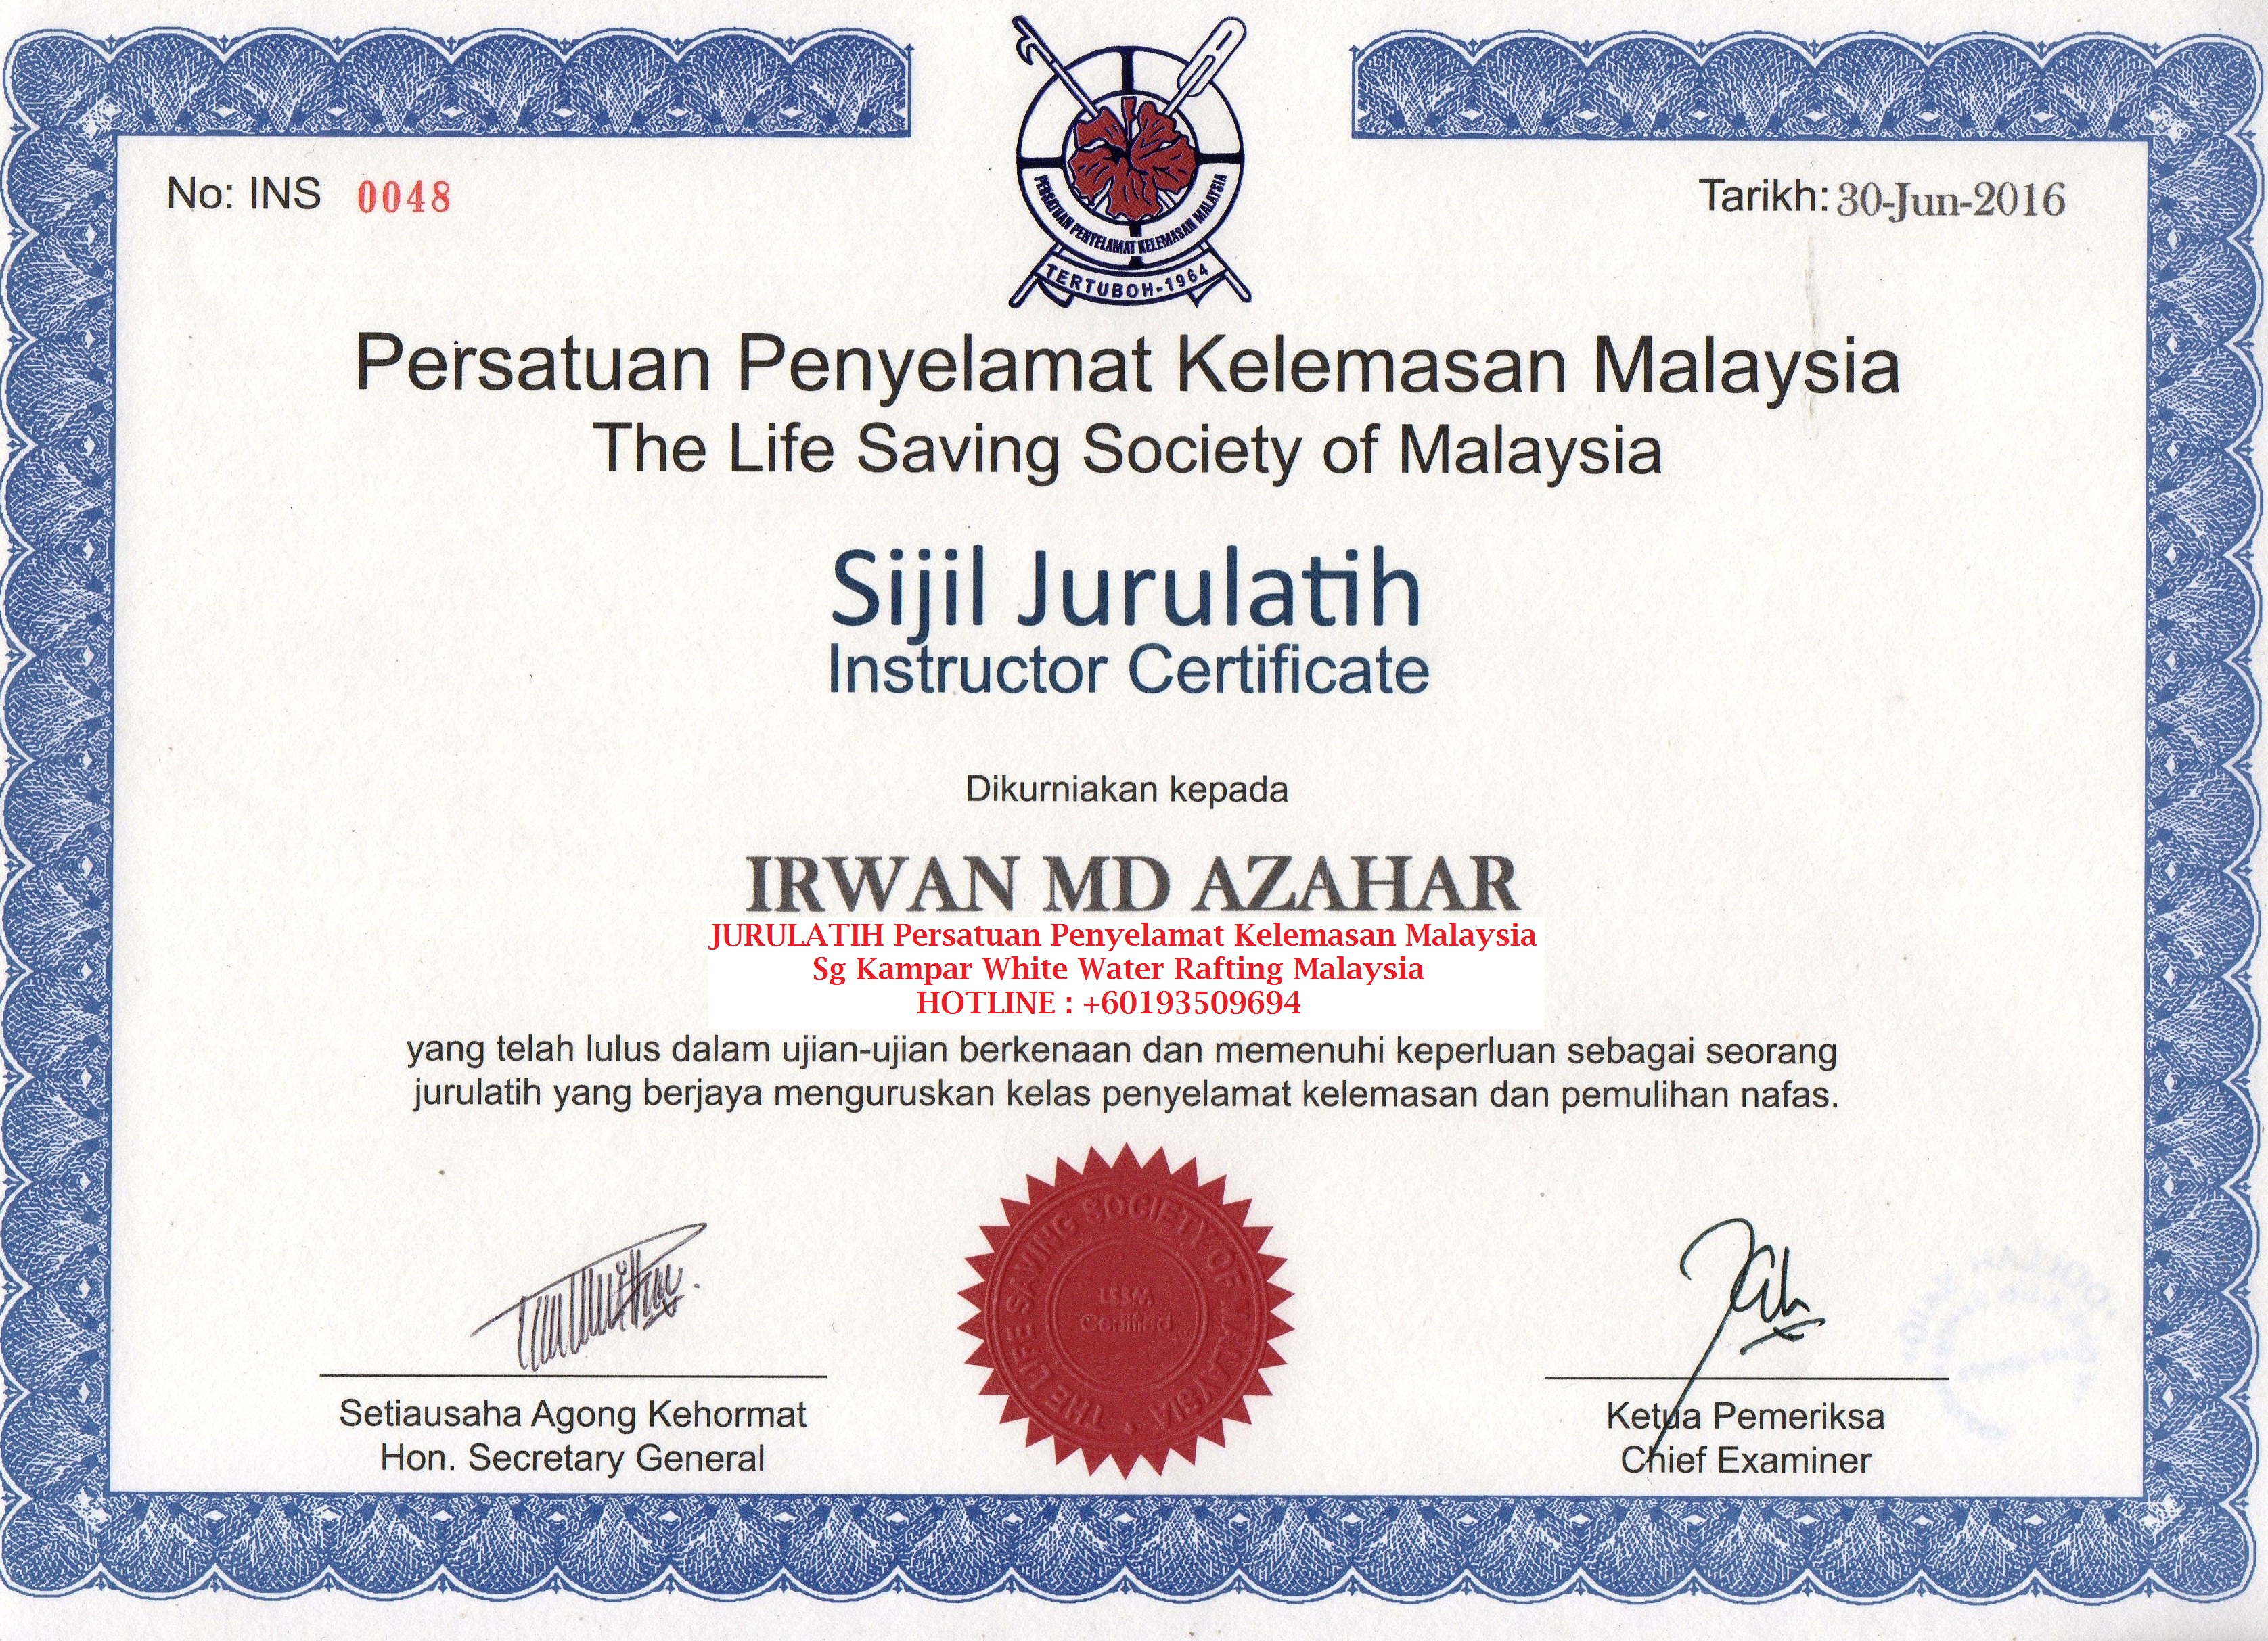 COACH certified irwan md azahar